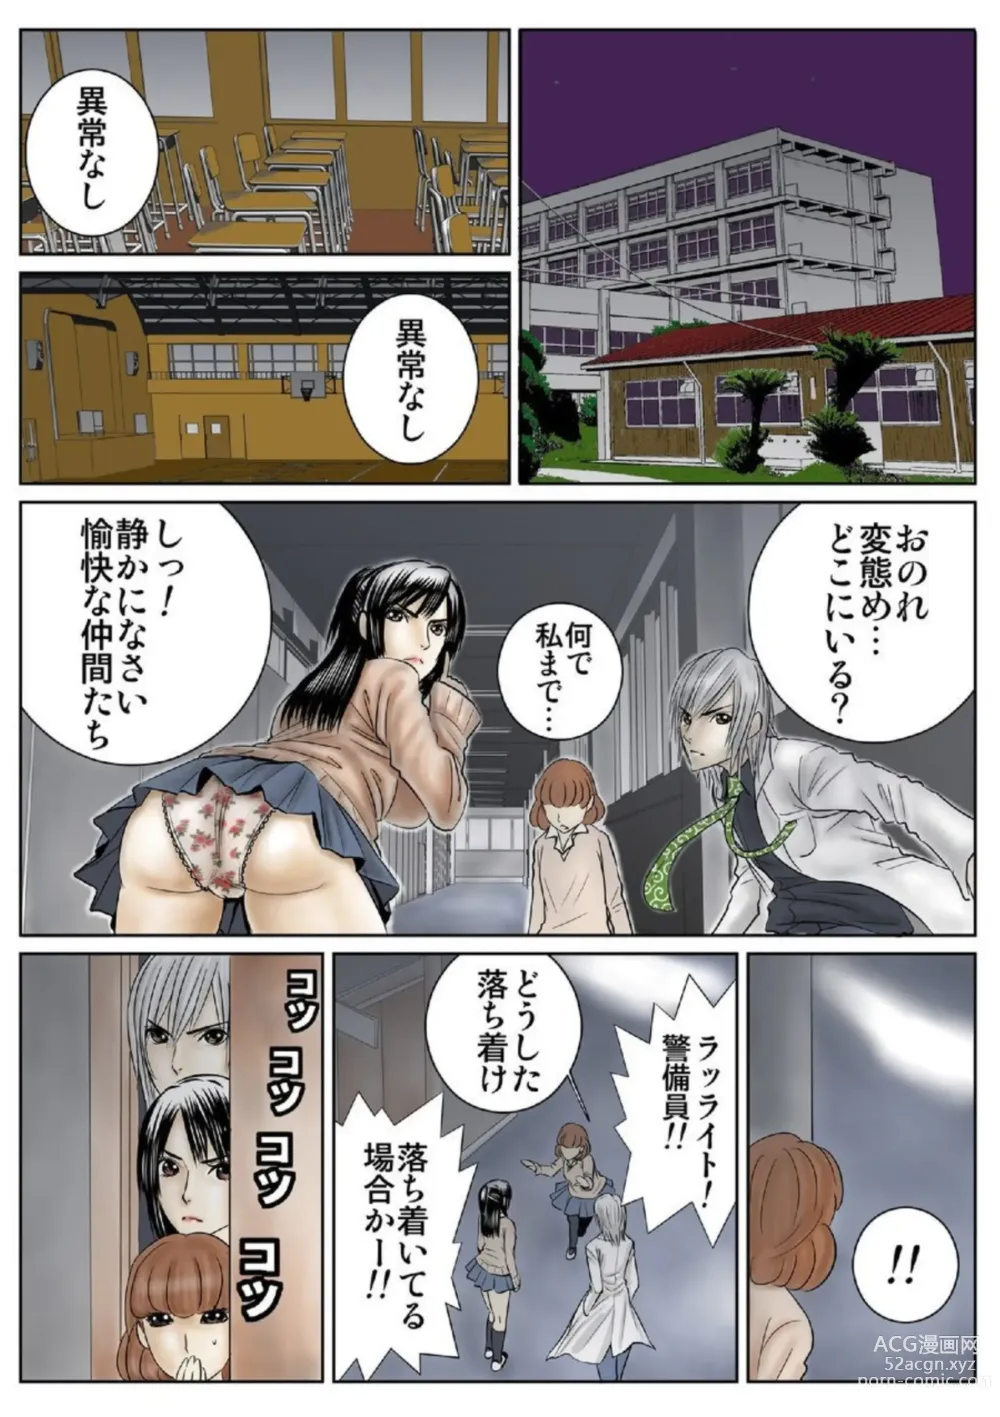 Page 8 of manga Ganriki! Miryō no Hōkago 1